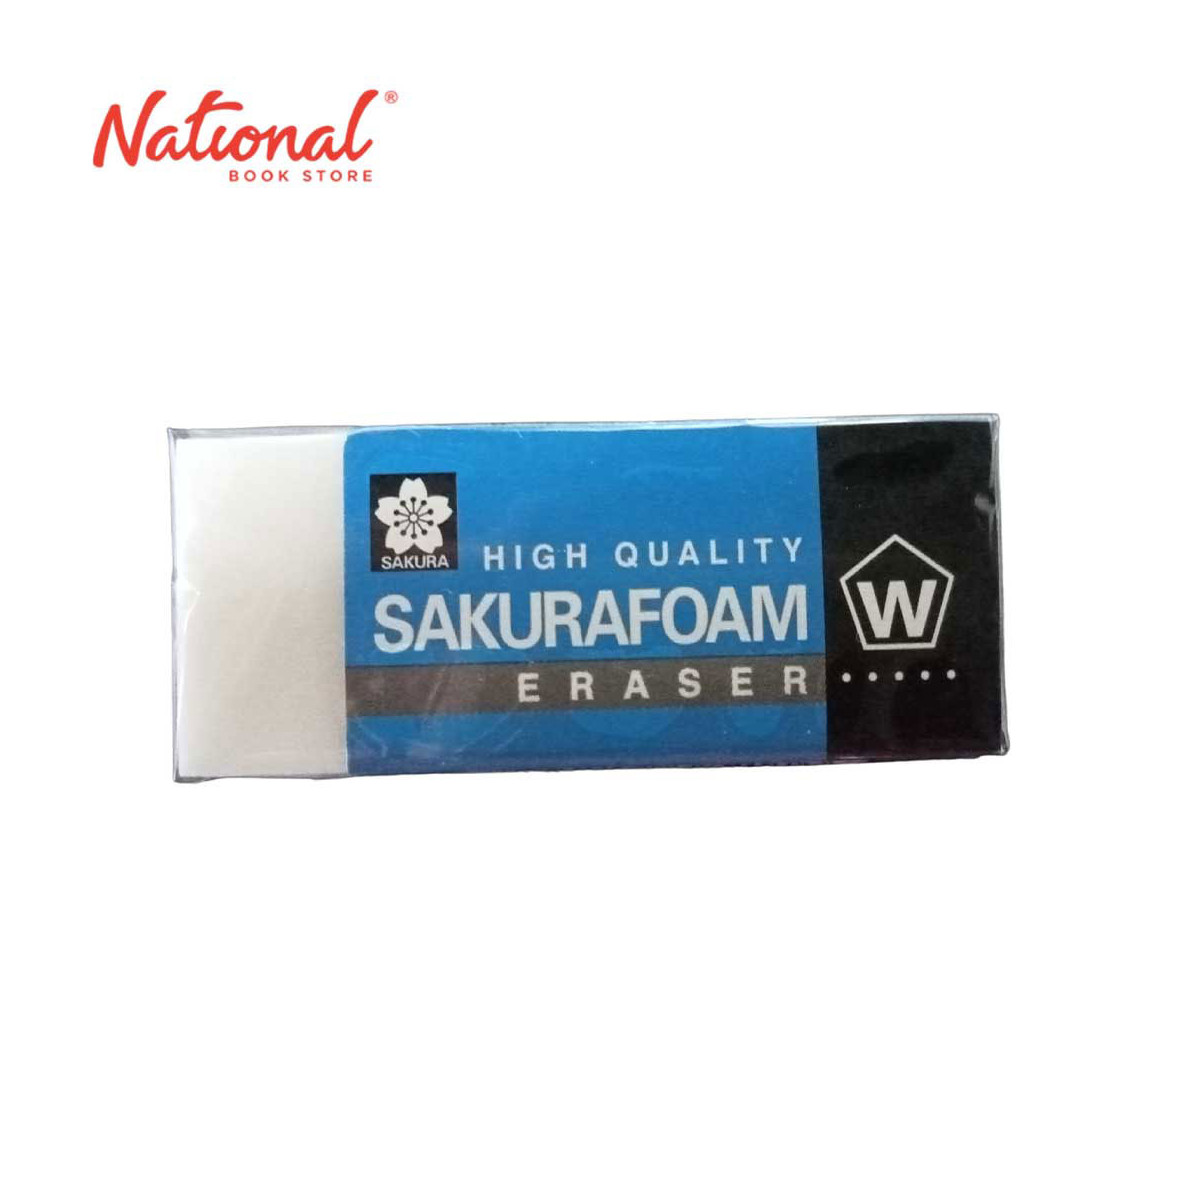 Sakura Foam Eraser White Big - Back To School Supplies